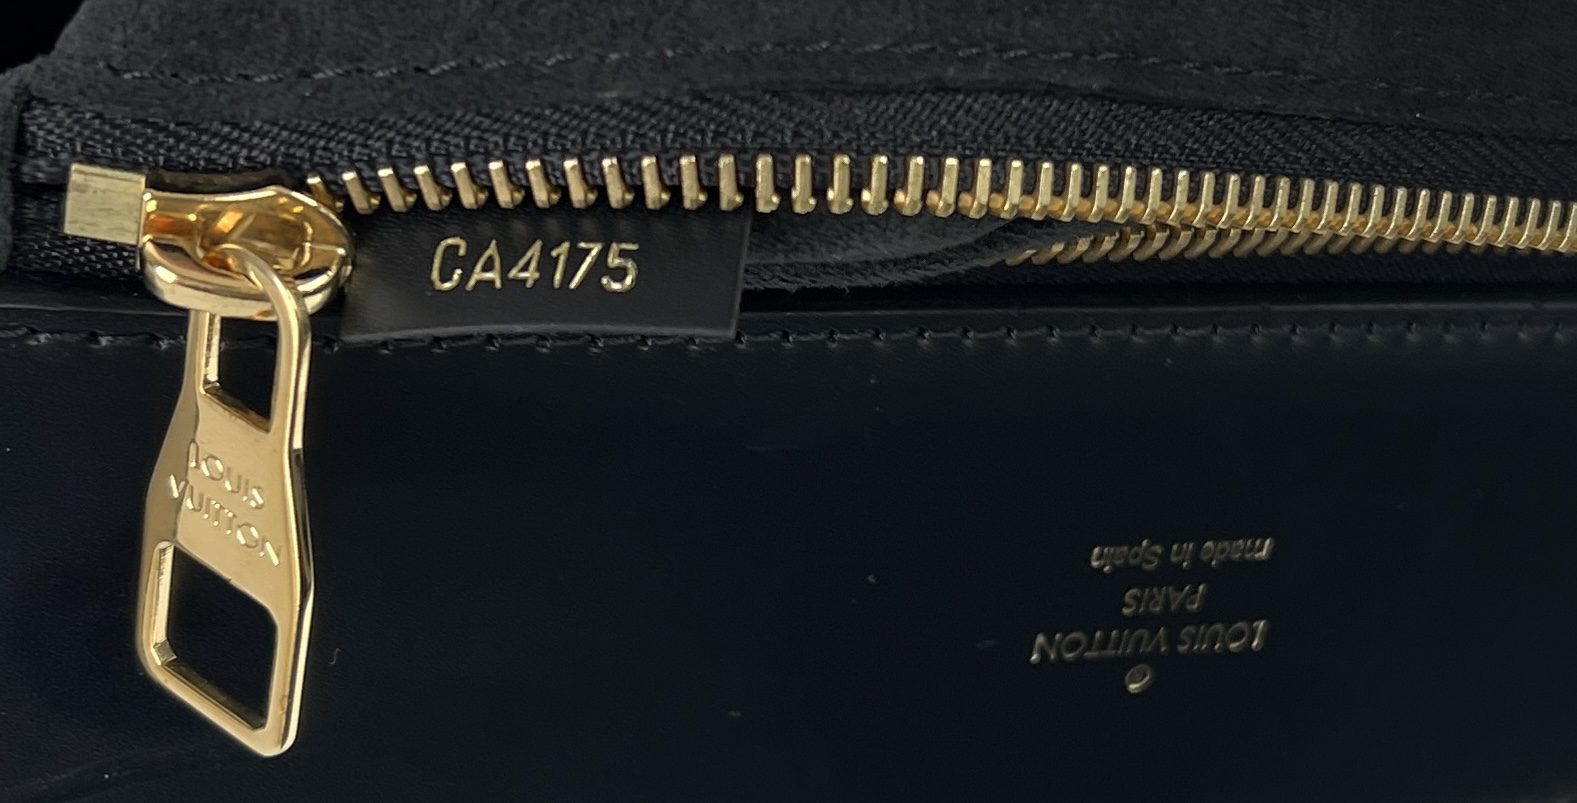 Louis Vuitton Monogram Canvas MM Leather Phenix Cross Body Bag LV-0611N-0003